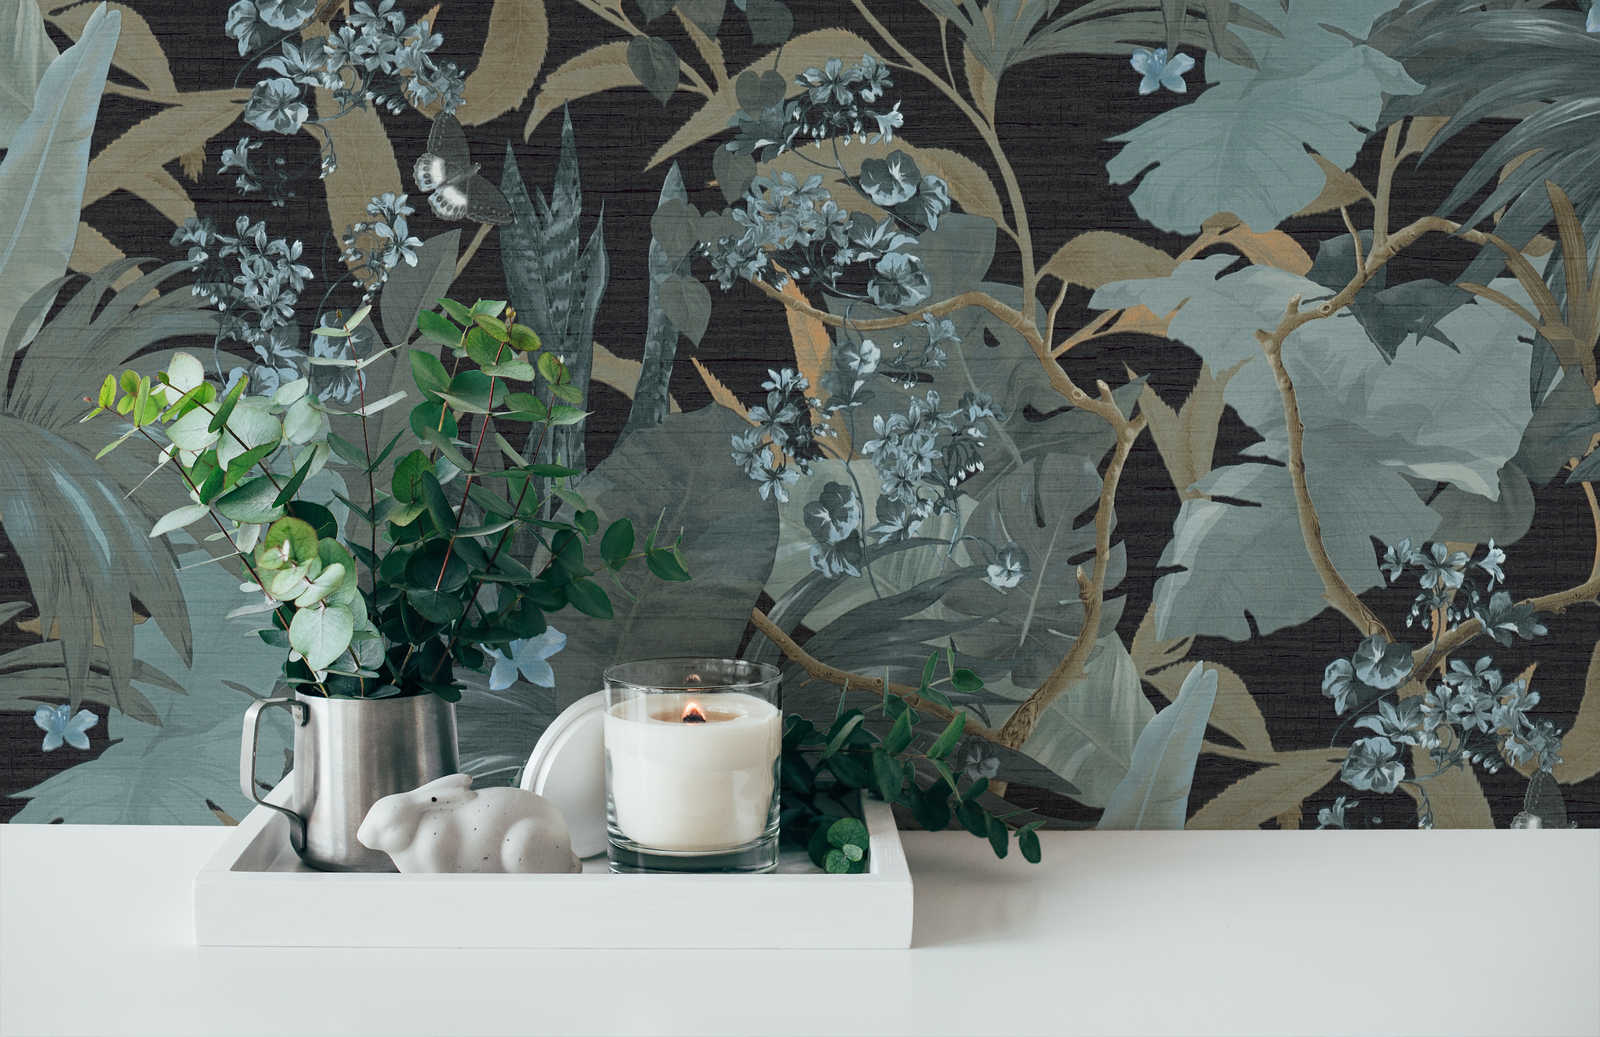             Wallpaper jungle design with leaf pattern - grey, green
        